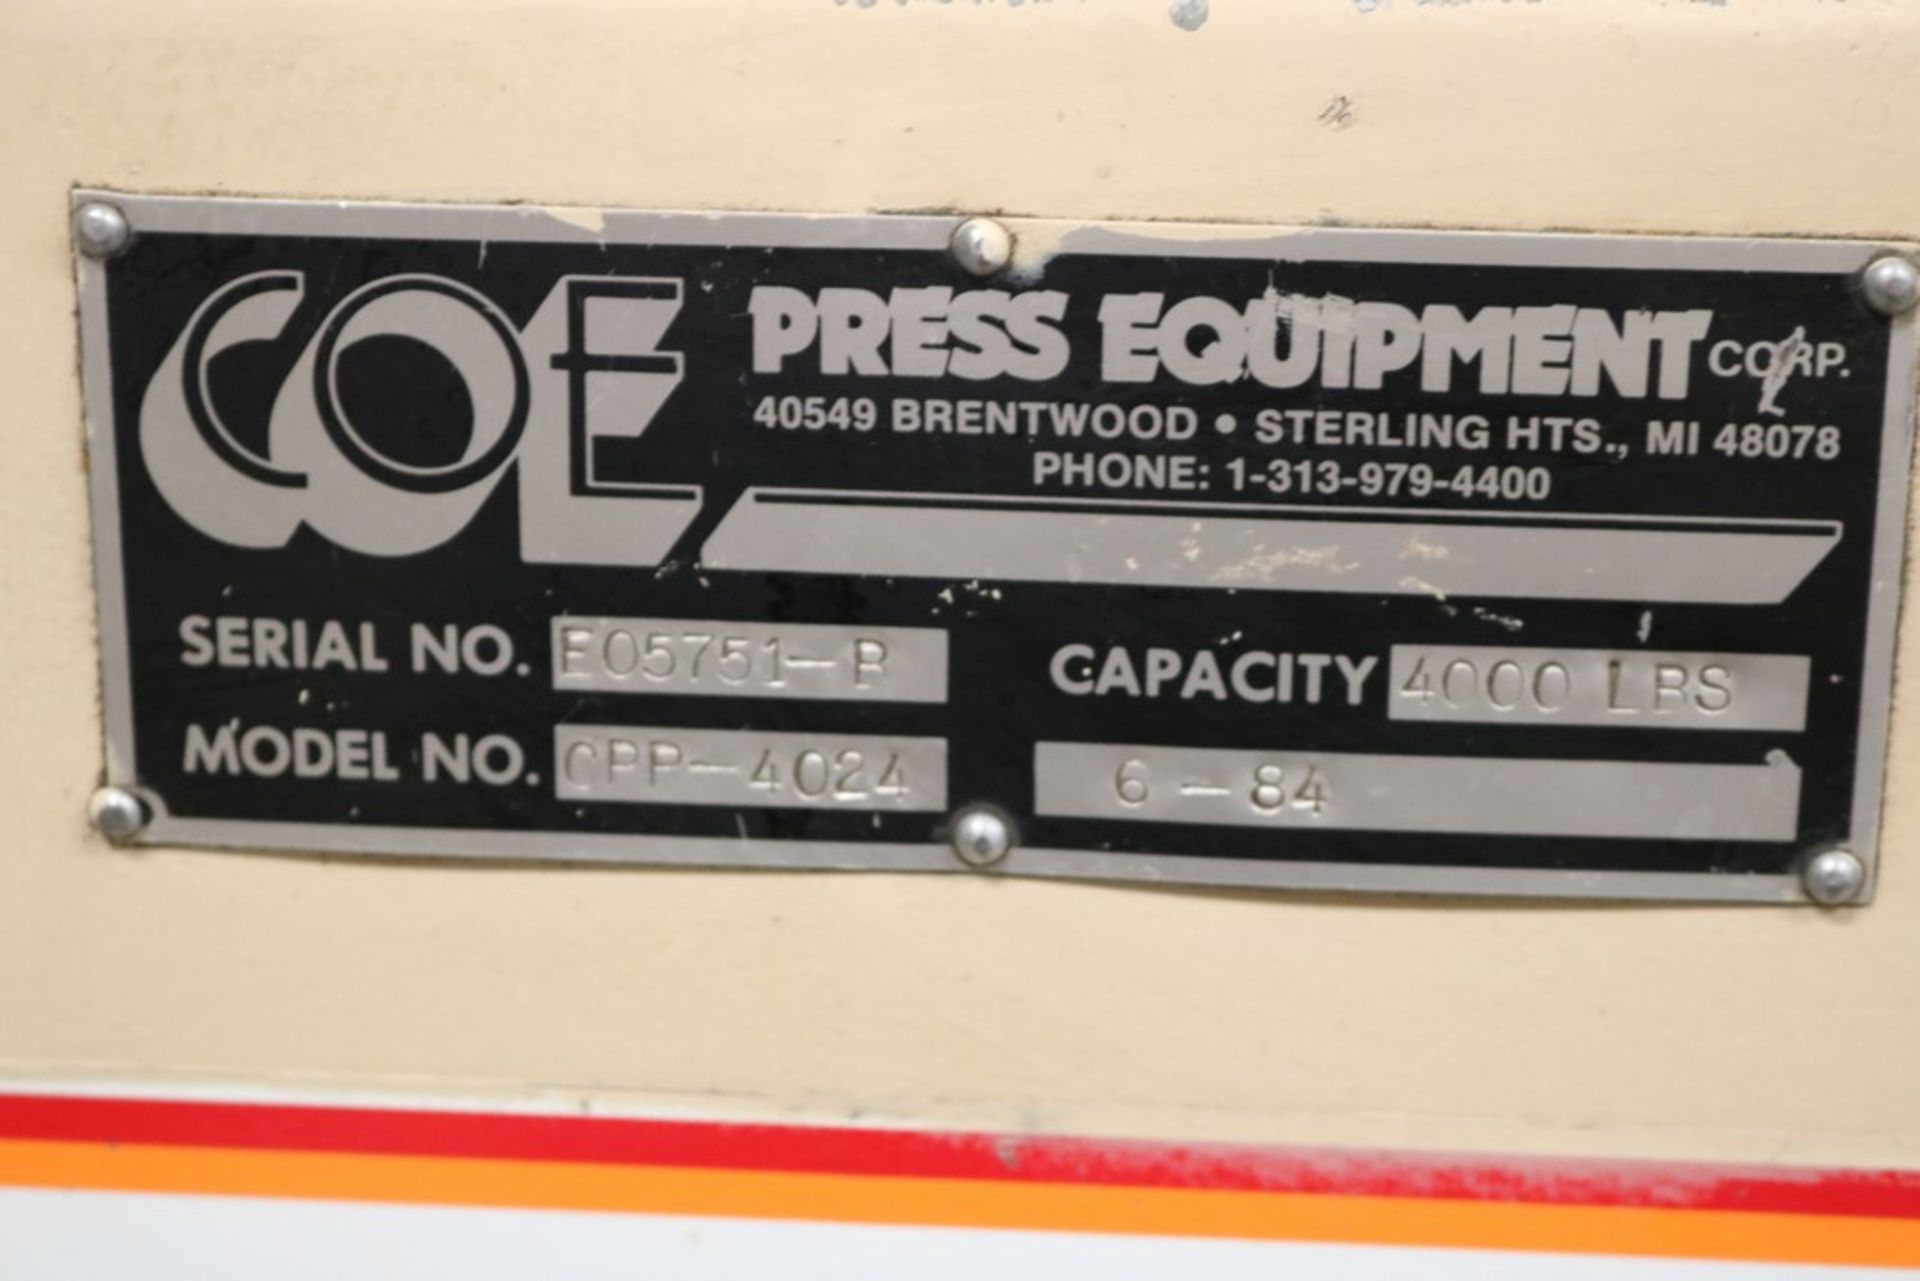 COE Press Equipment Stock Reel, 4000 LB Capacity, Model CPP-4024 - Image 3 of 7